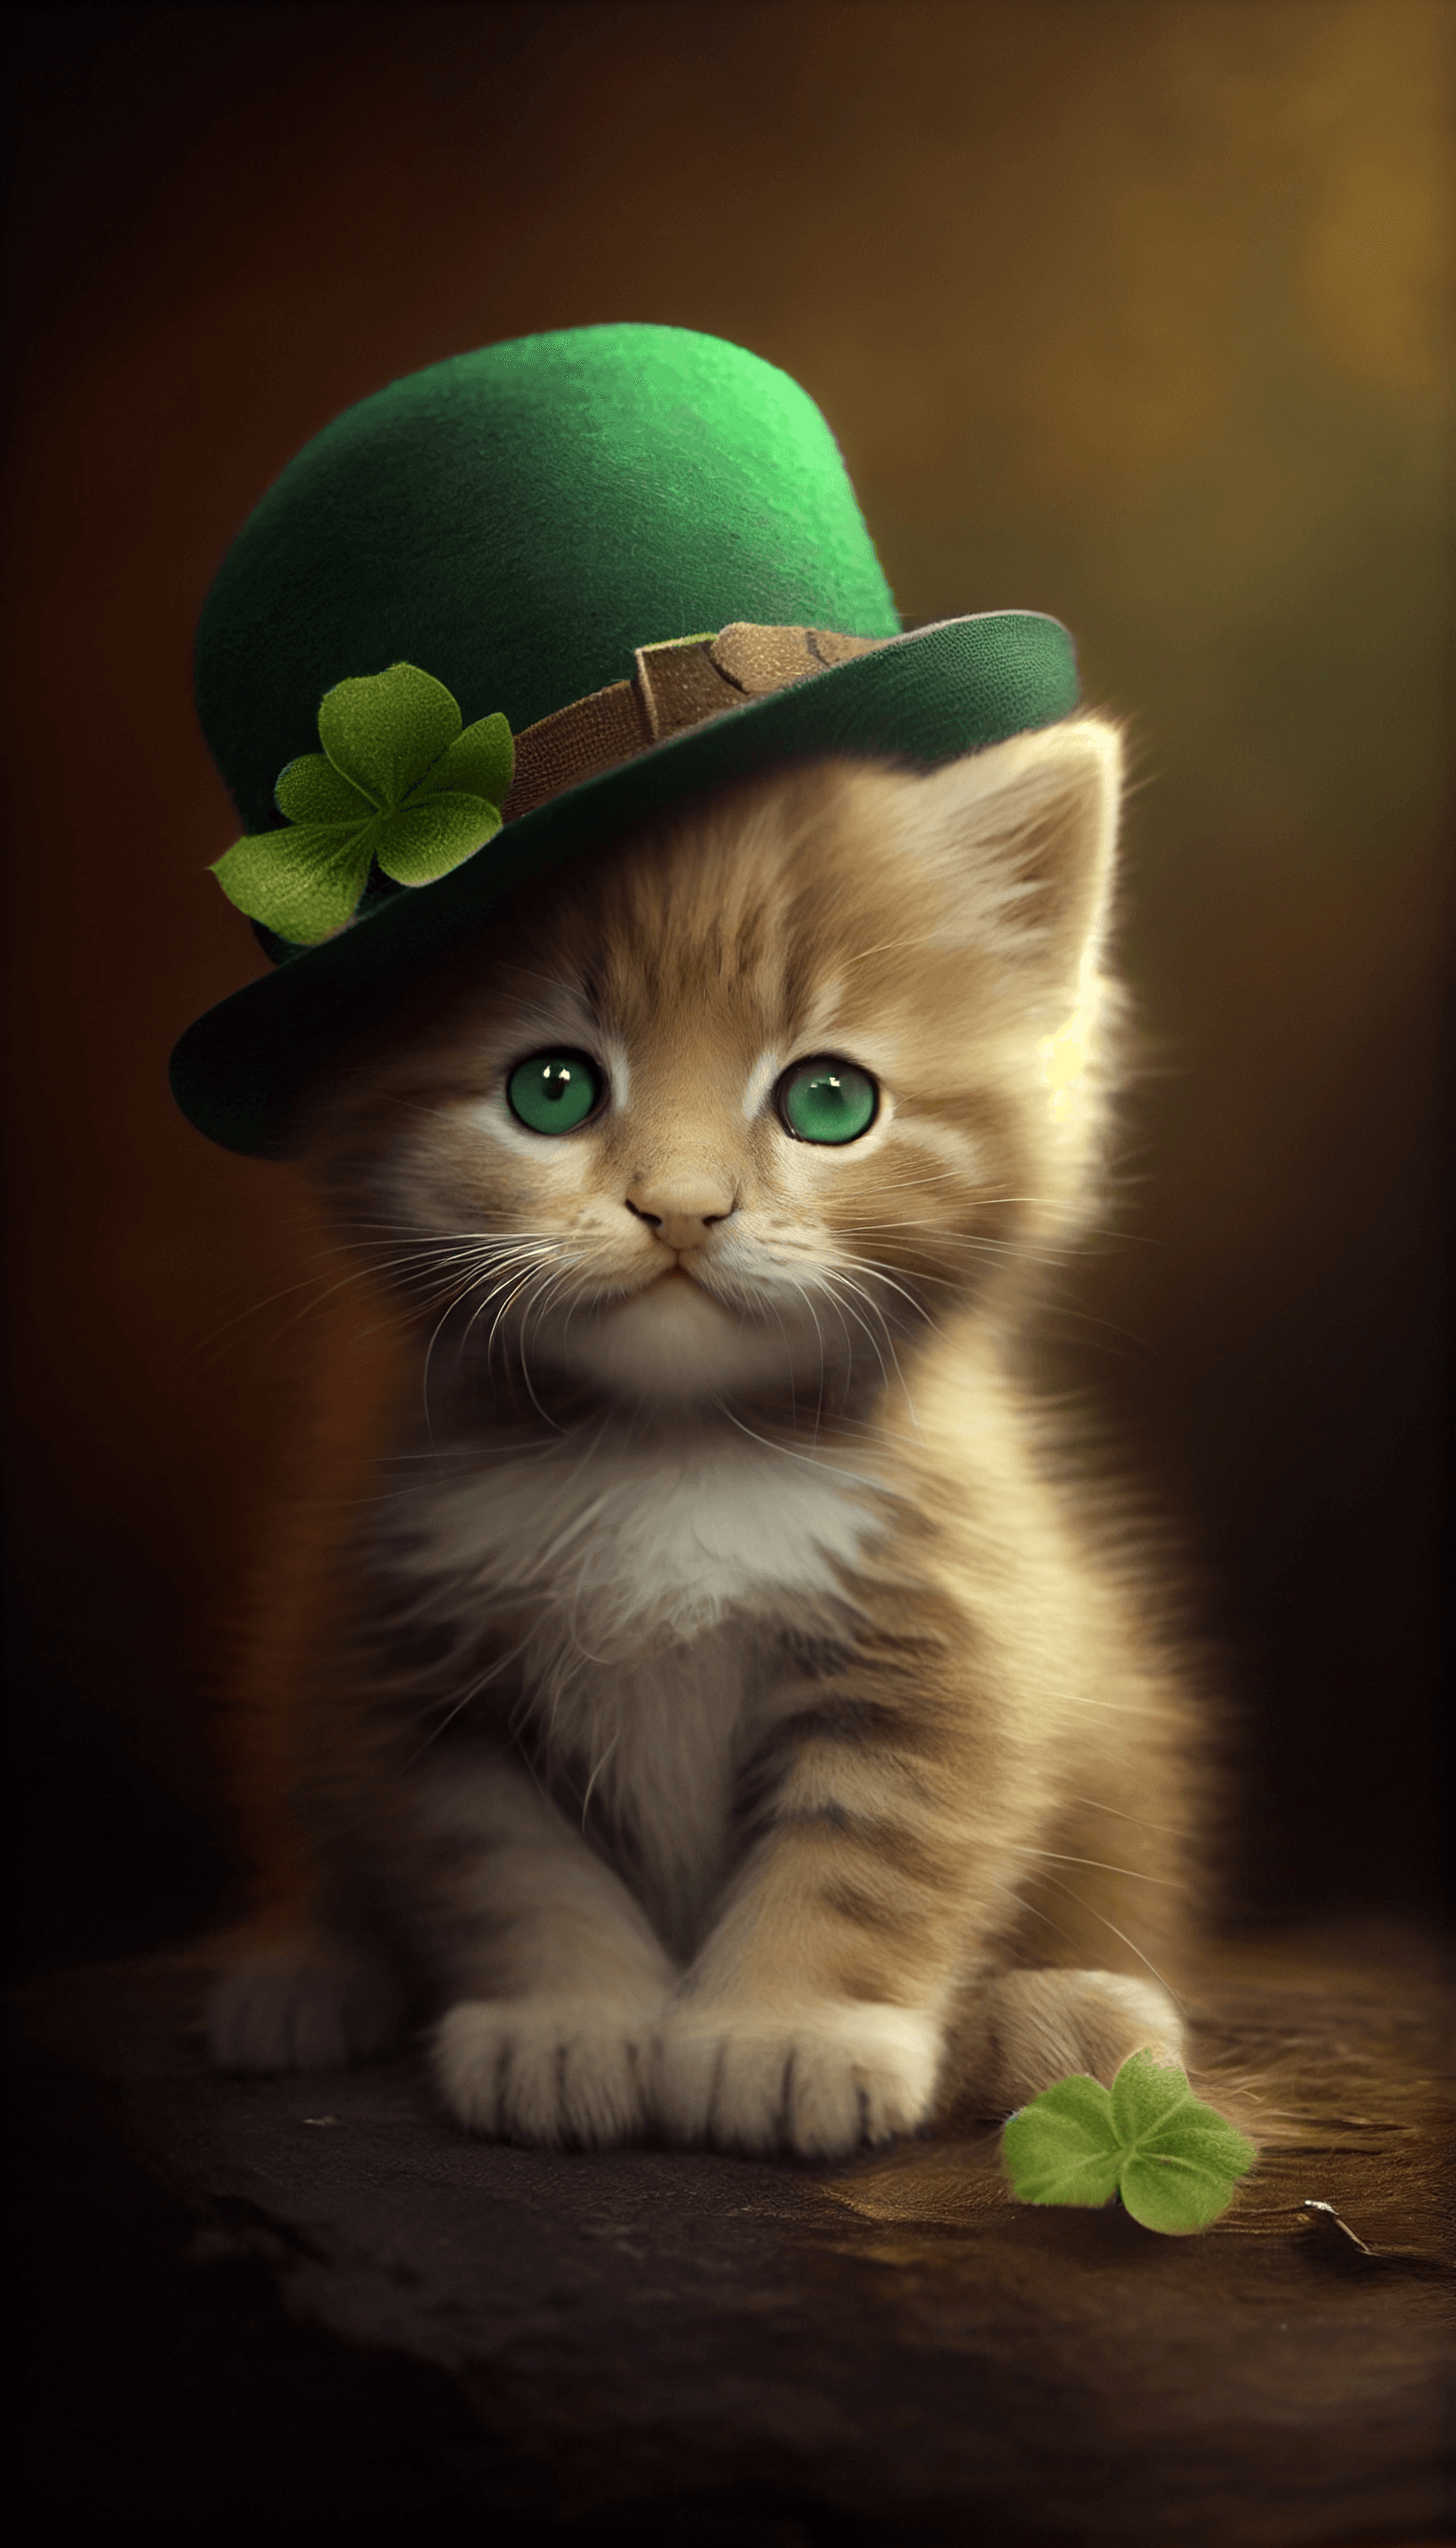 Adorable ginger kitten in the green hat NFT cruzo